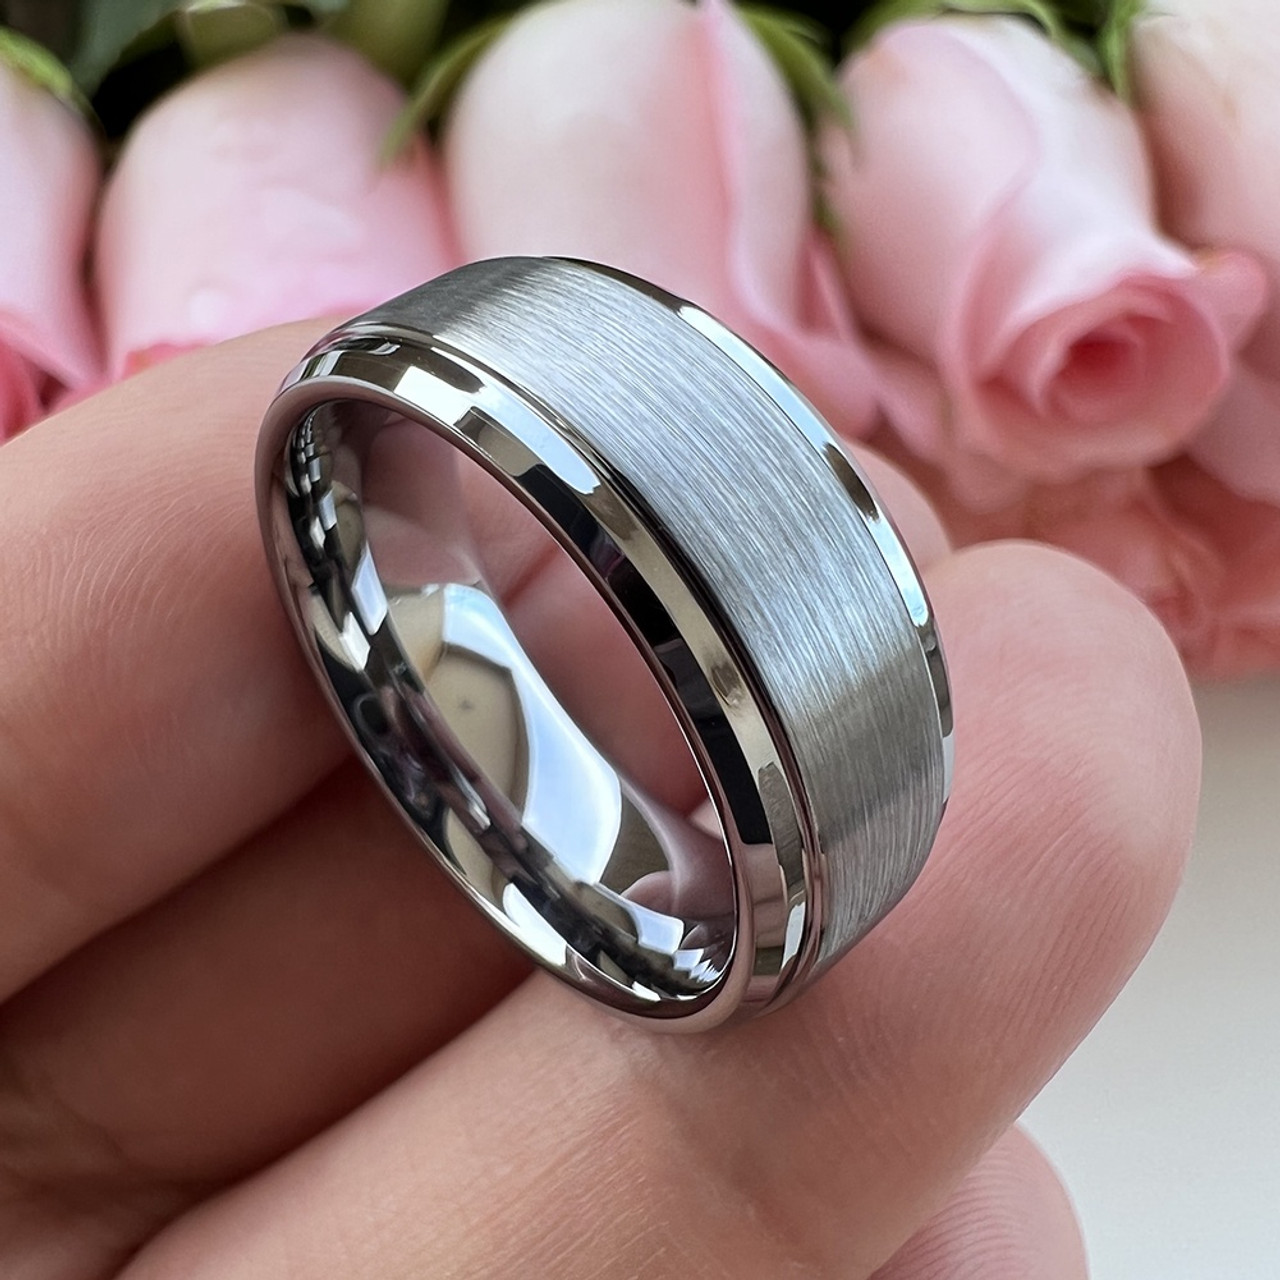 Gold Stone Ring Design for Men at Best Price | Parakkat Jewels